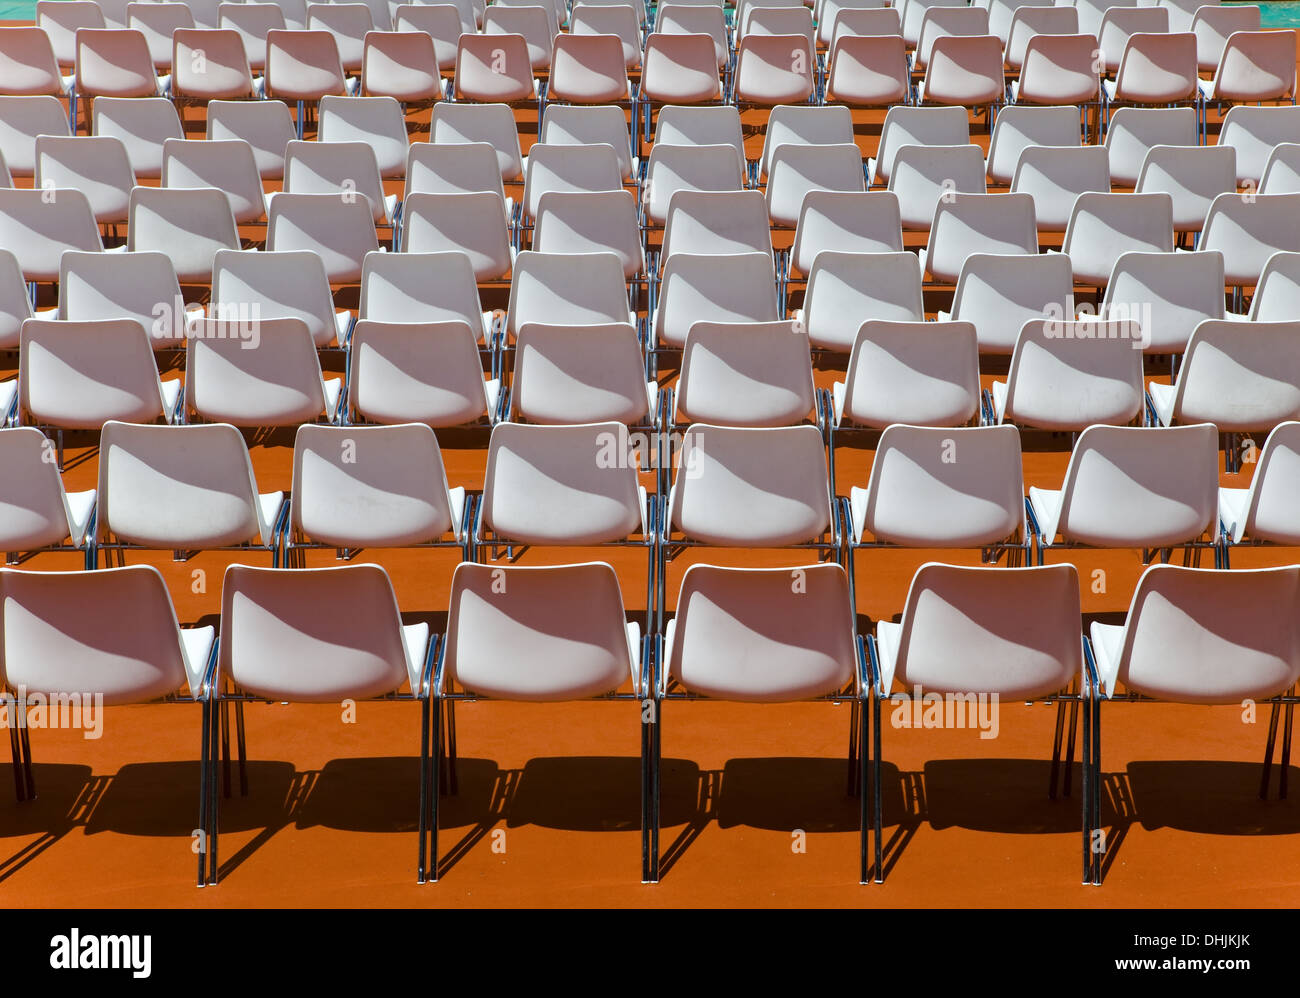 Empty rows of seats backs to spectator Stock Photo